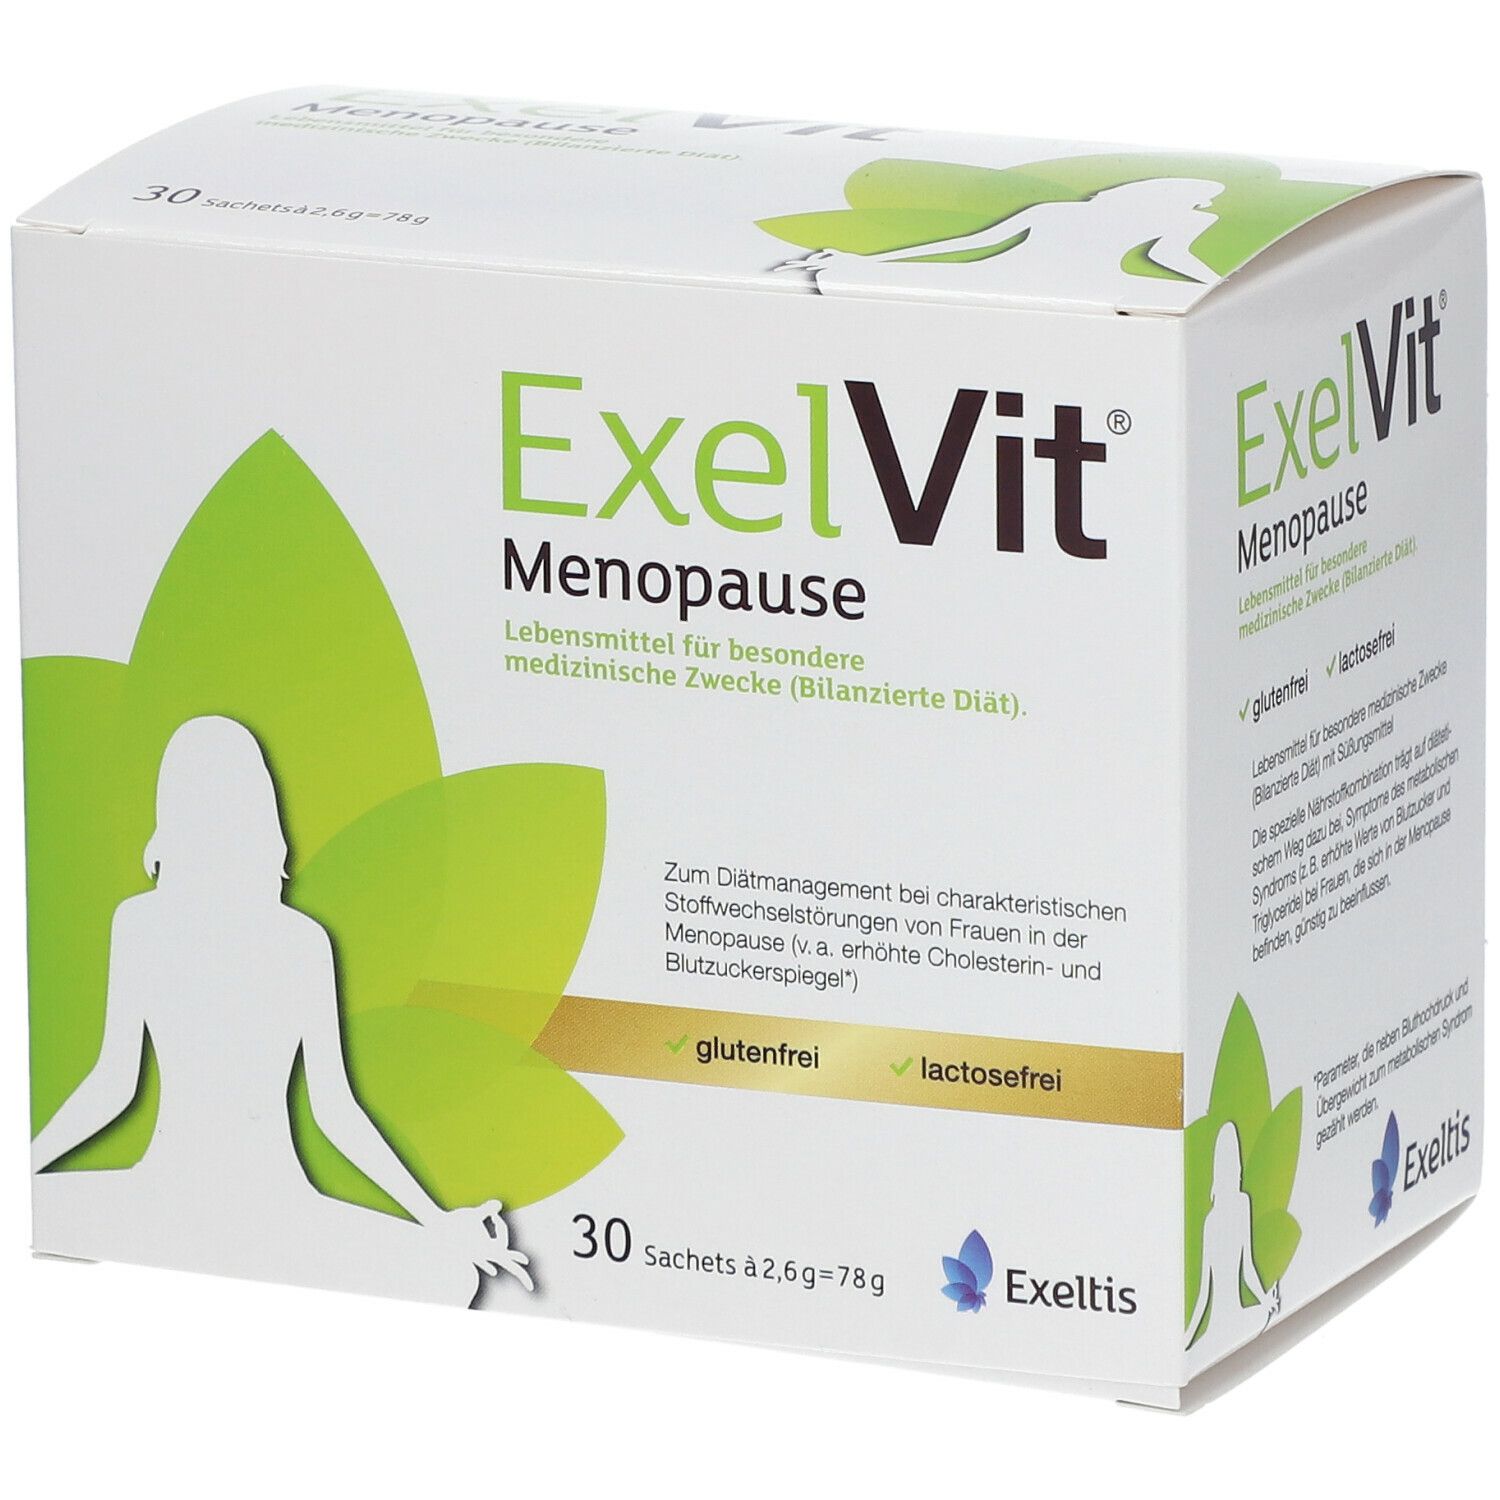 ExcelVit® Menopause